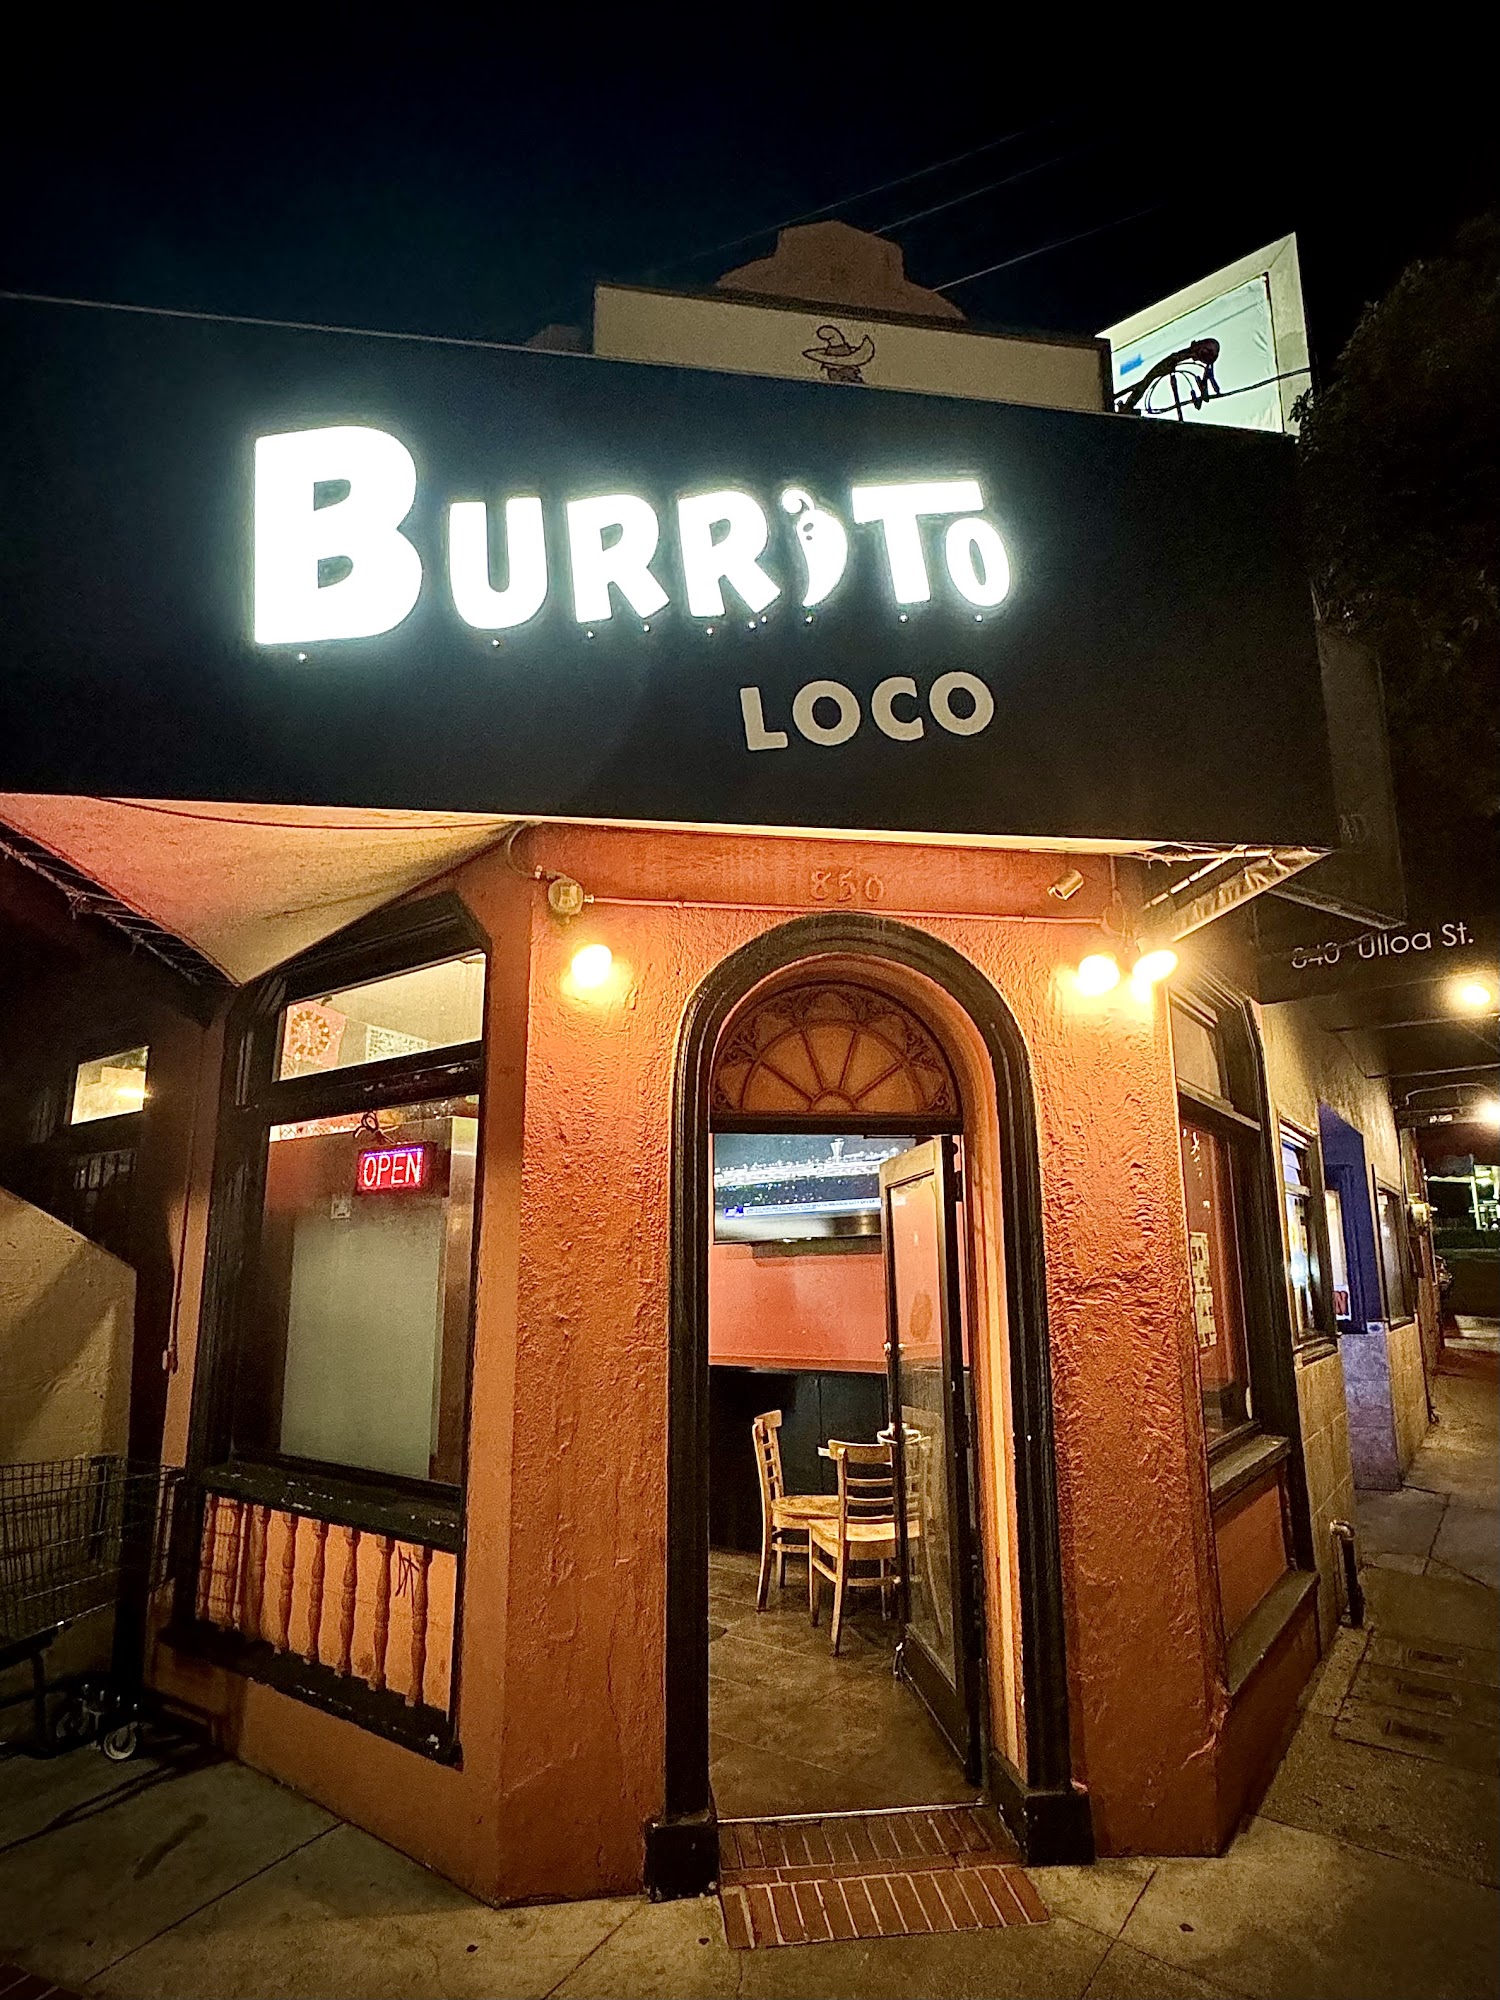 Burrito loco